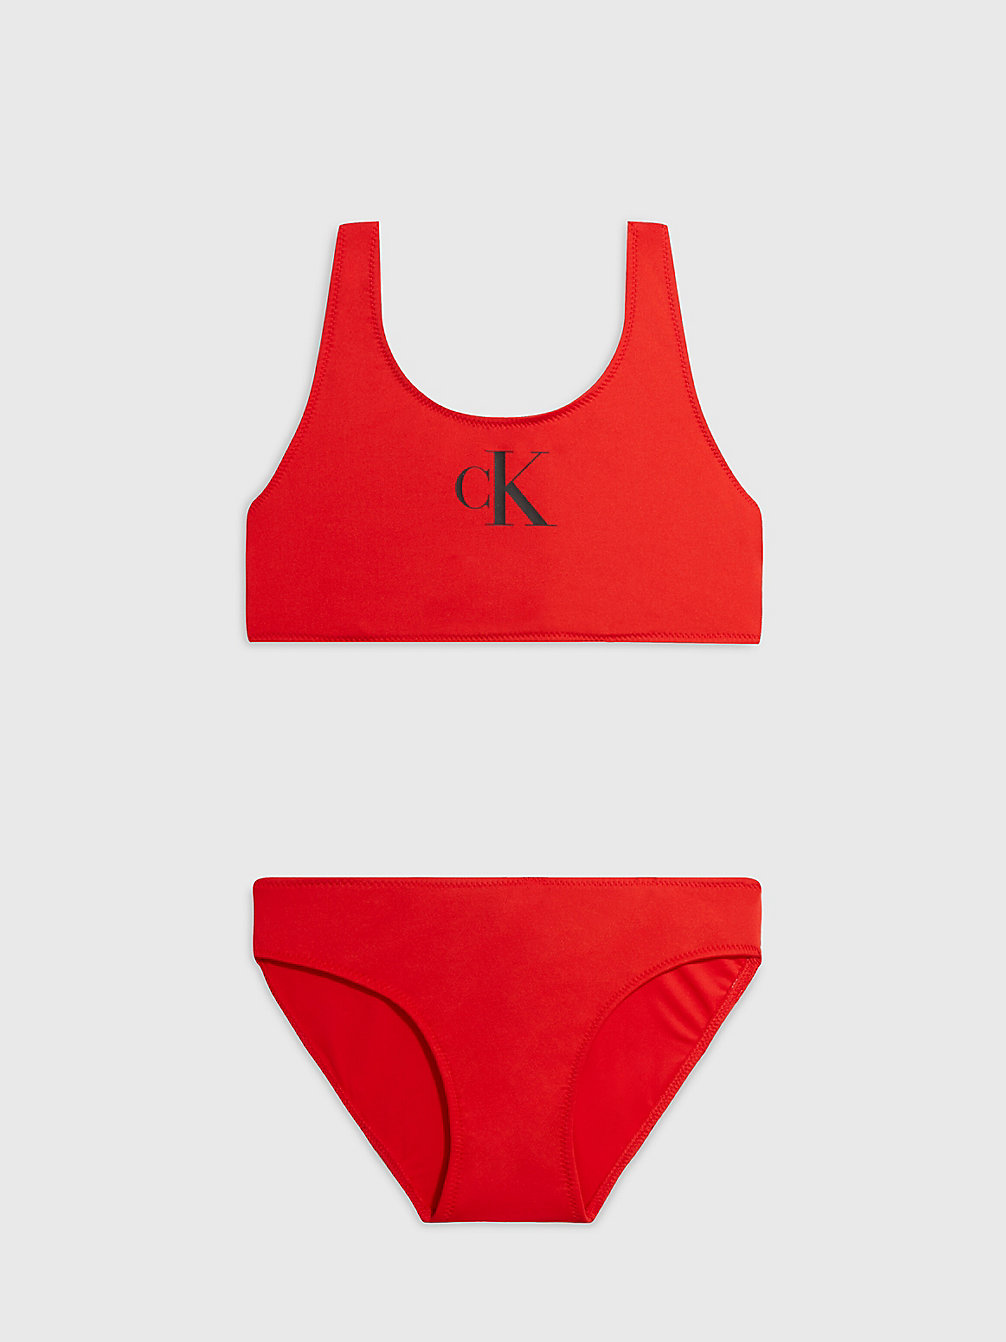 CAJUN RED > Meisjesbralette Bikini - CK Monogram > undefined girls - Calvin Klein